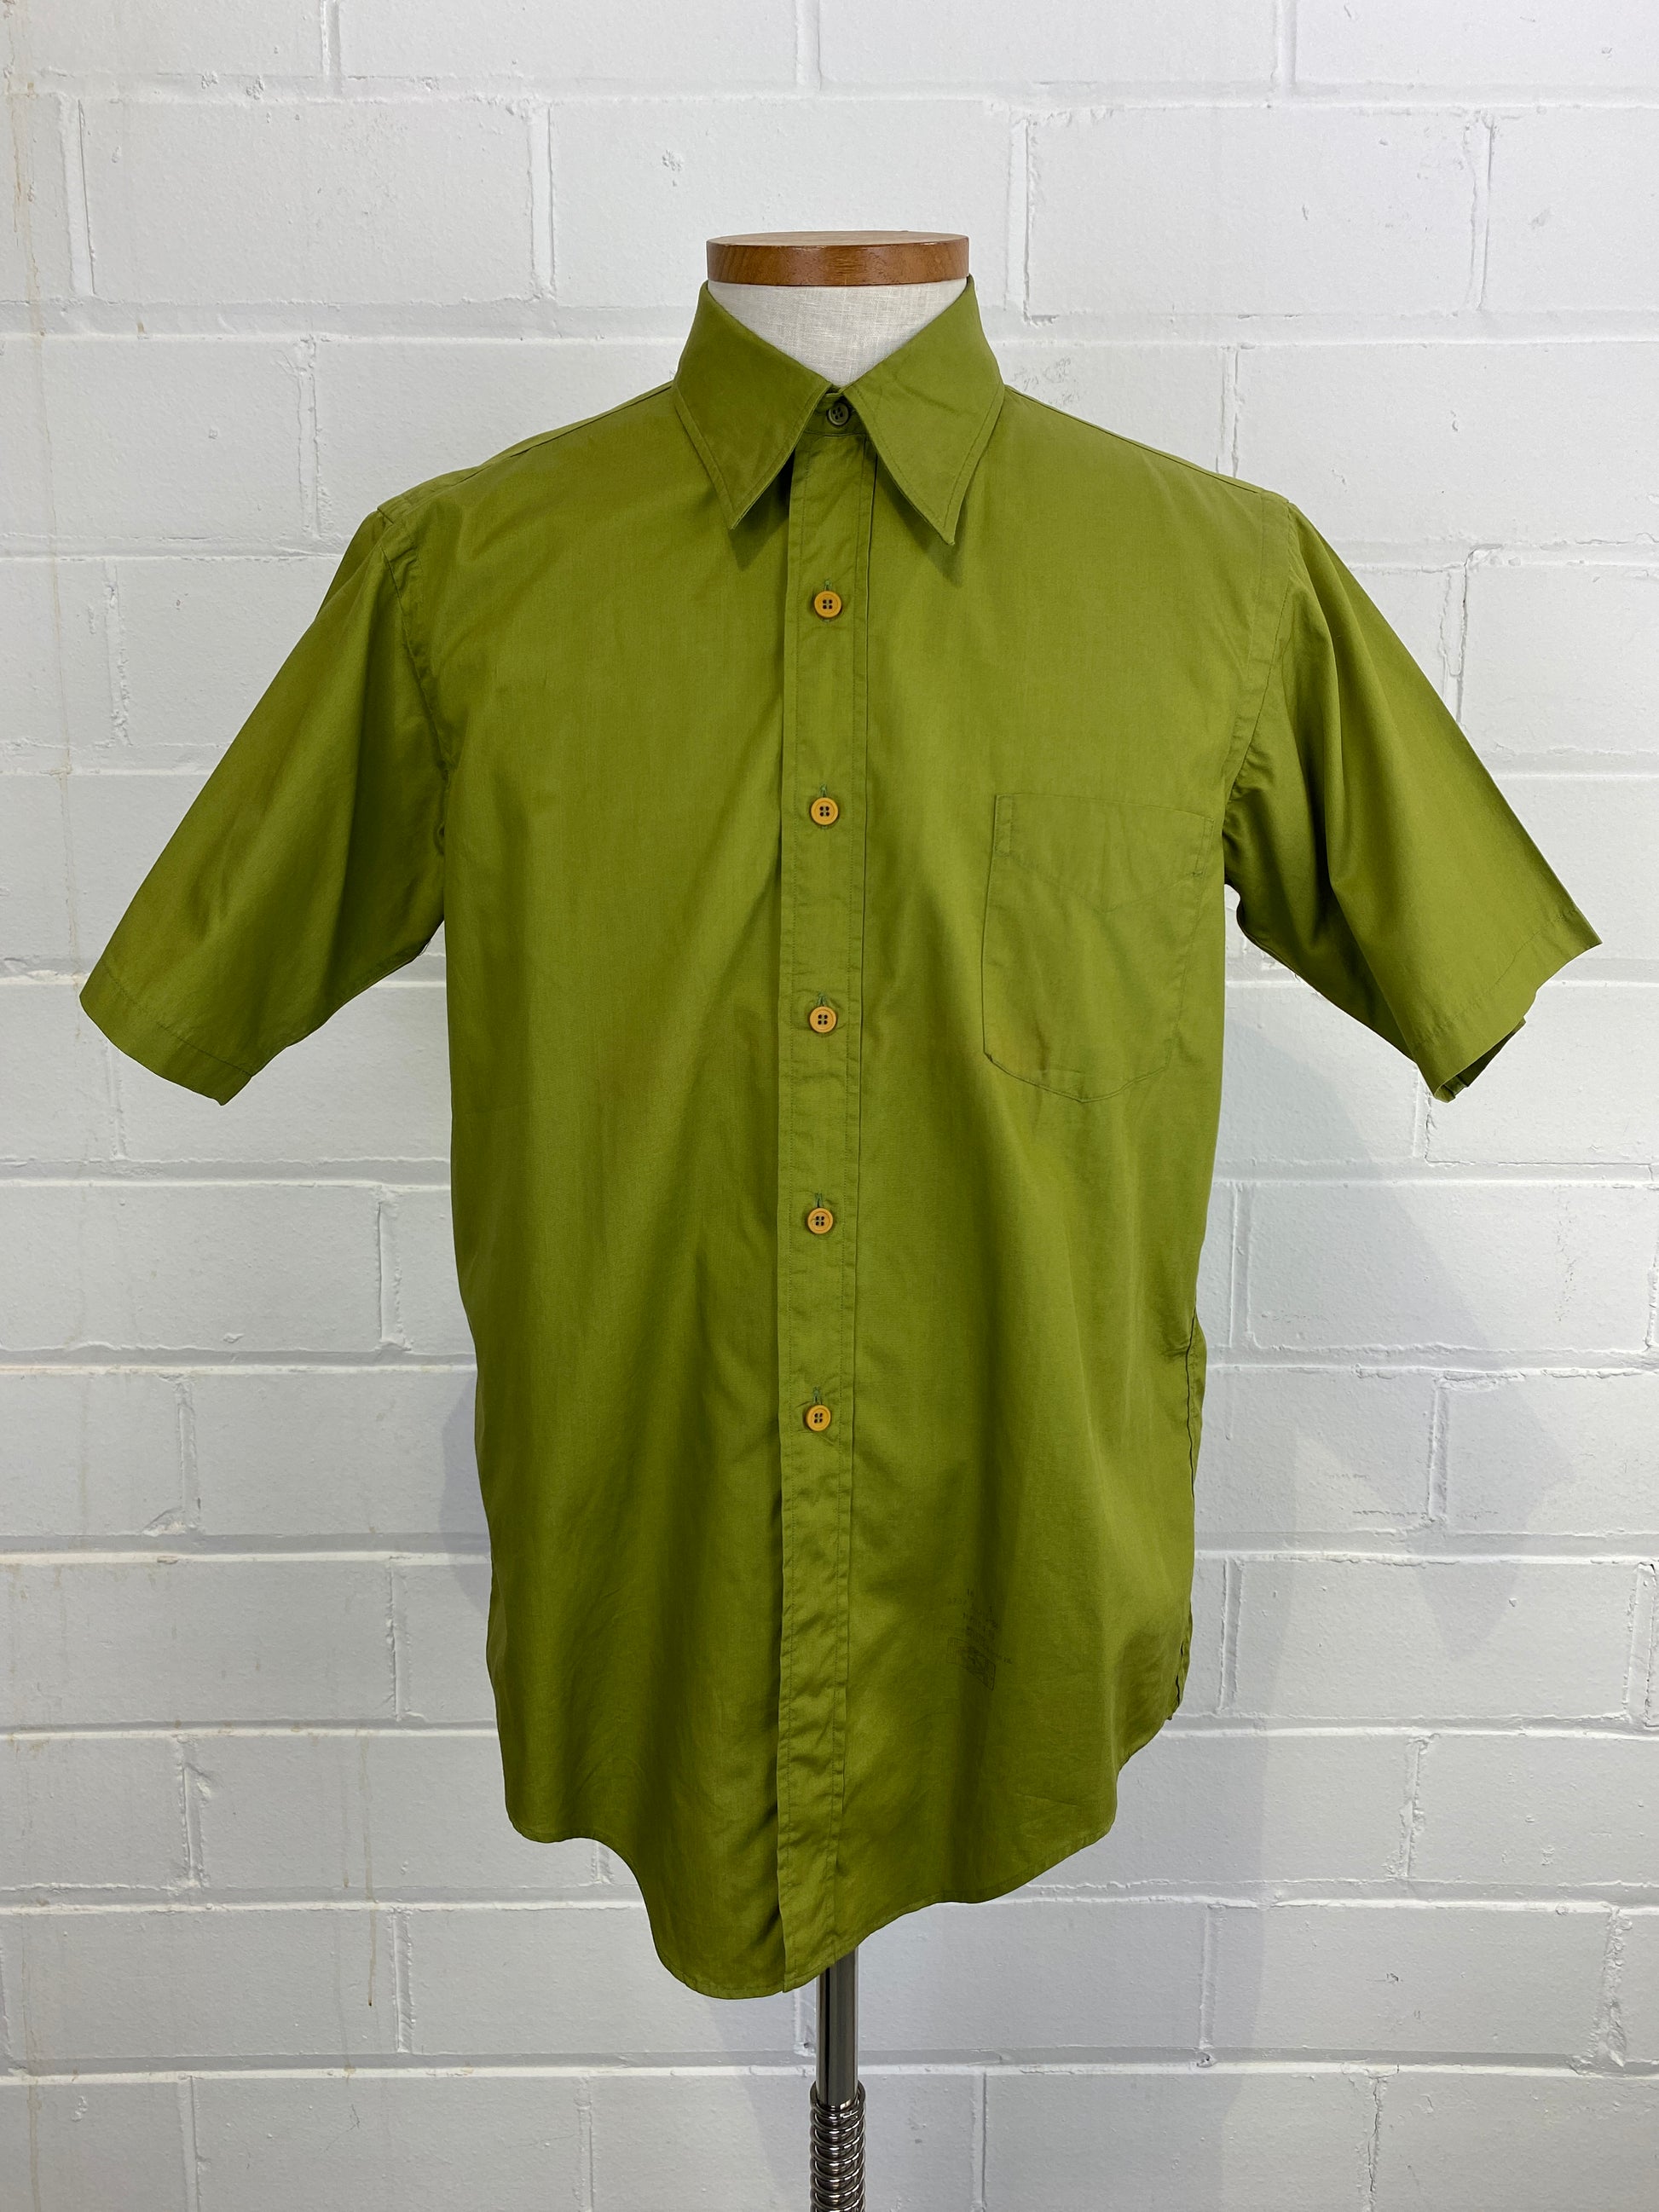 Vintage 70s Men's Short Sleeve Green Cotton Button-Up Shirt, Doubles